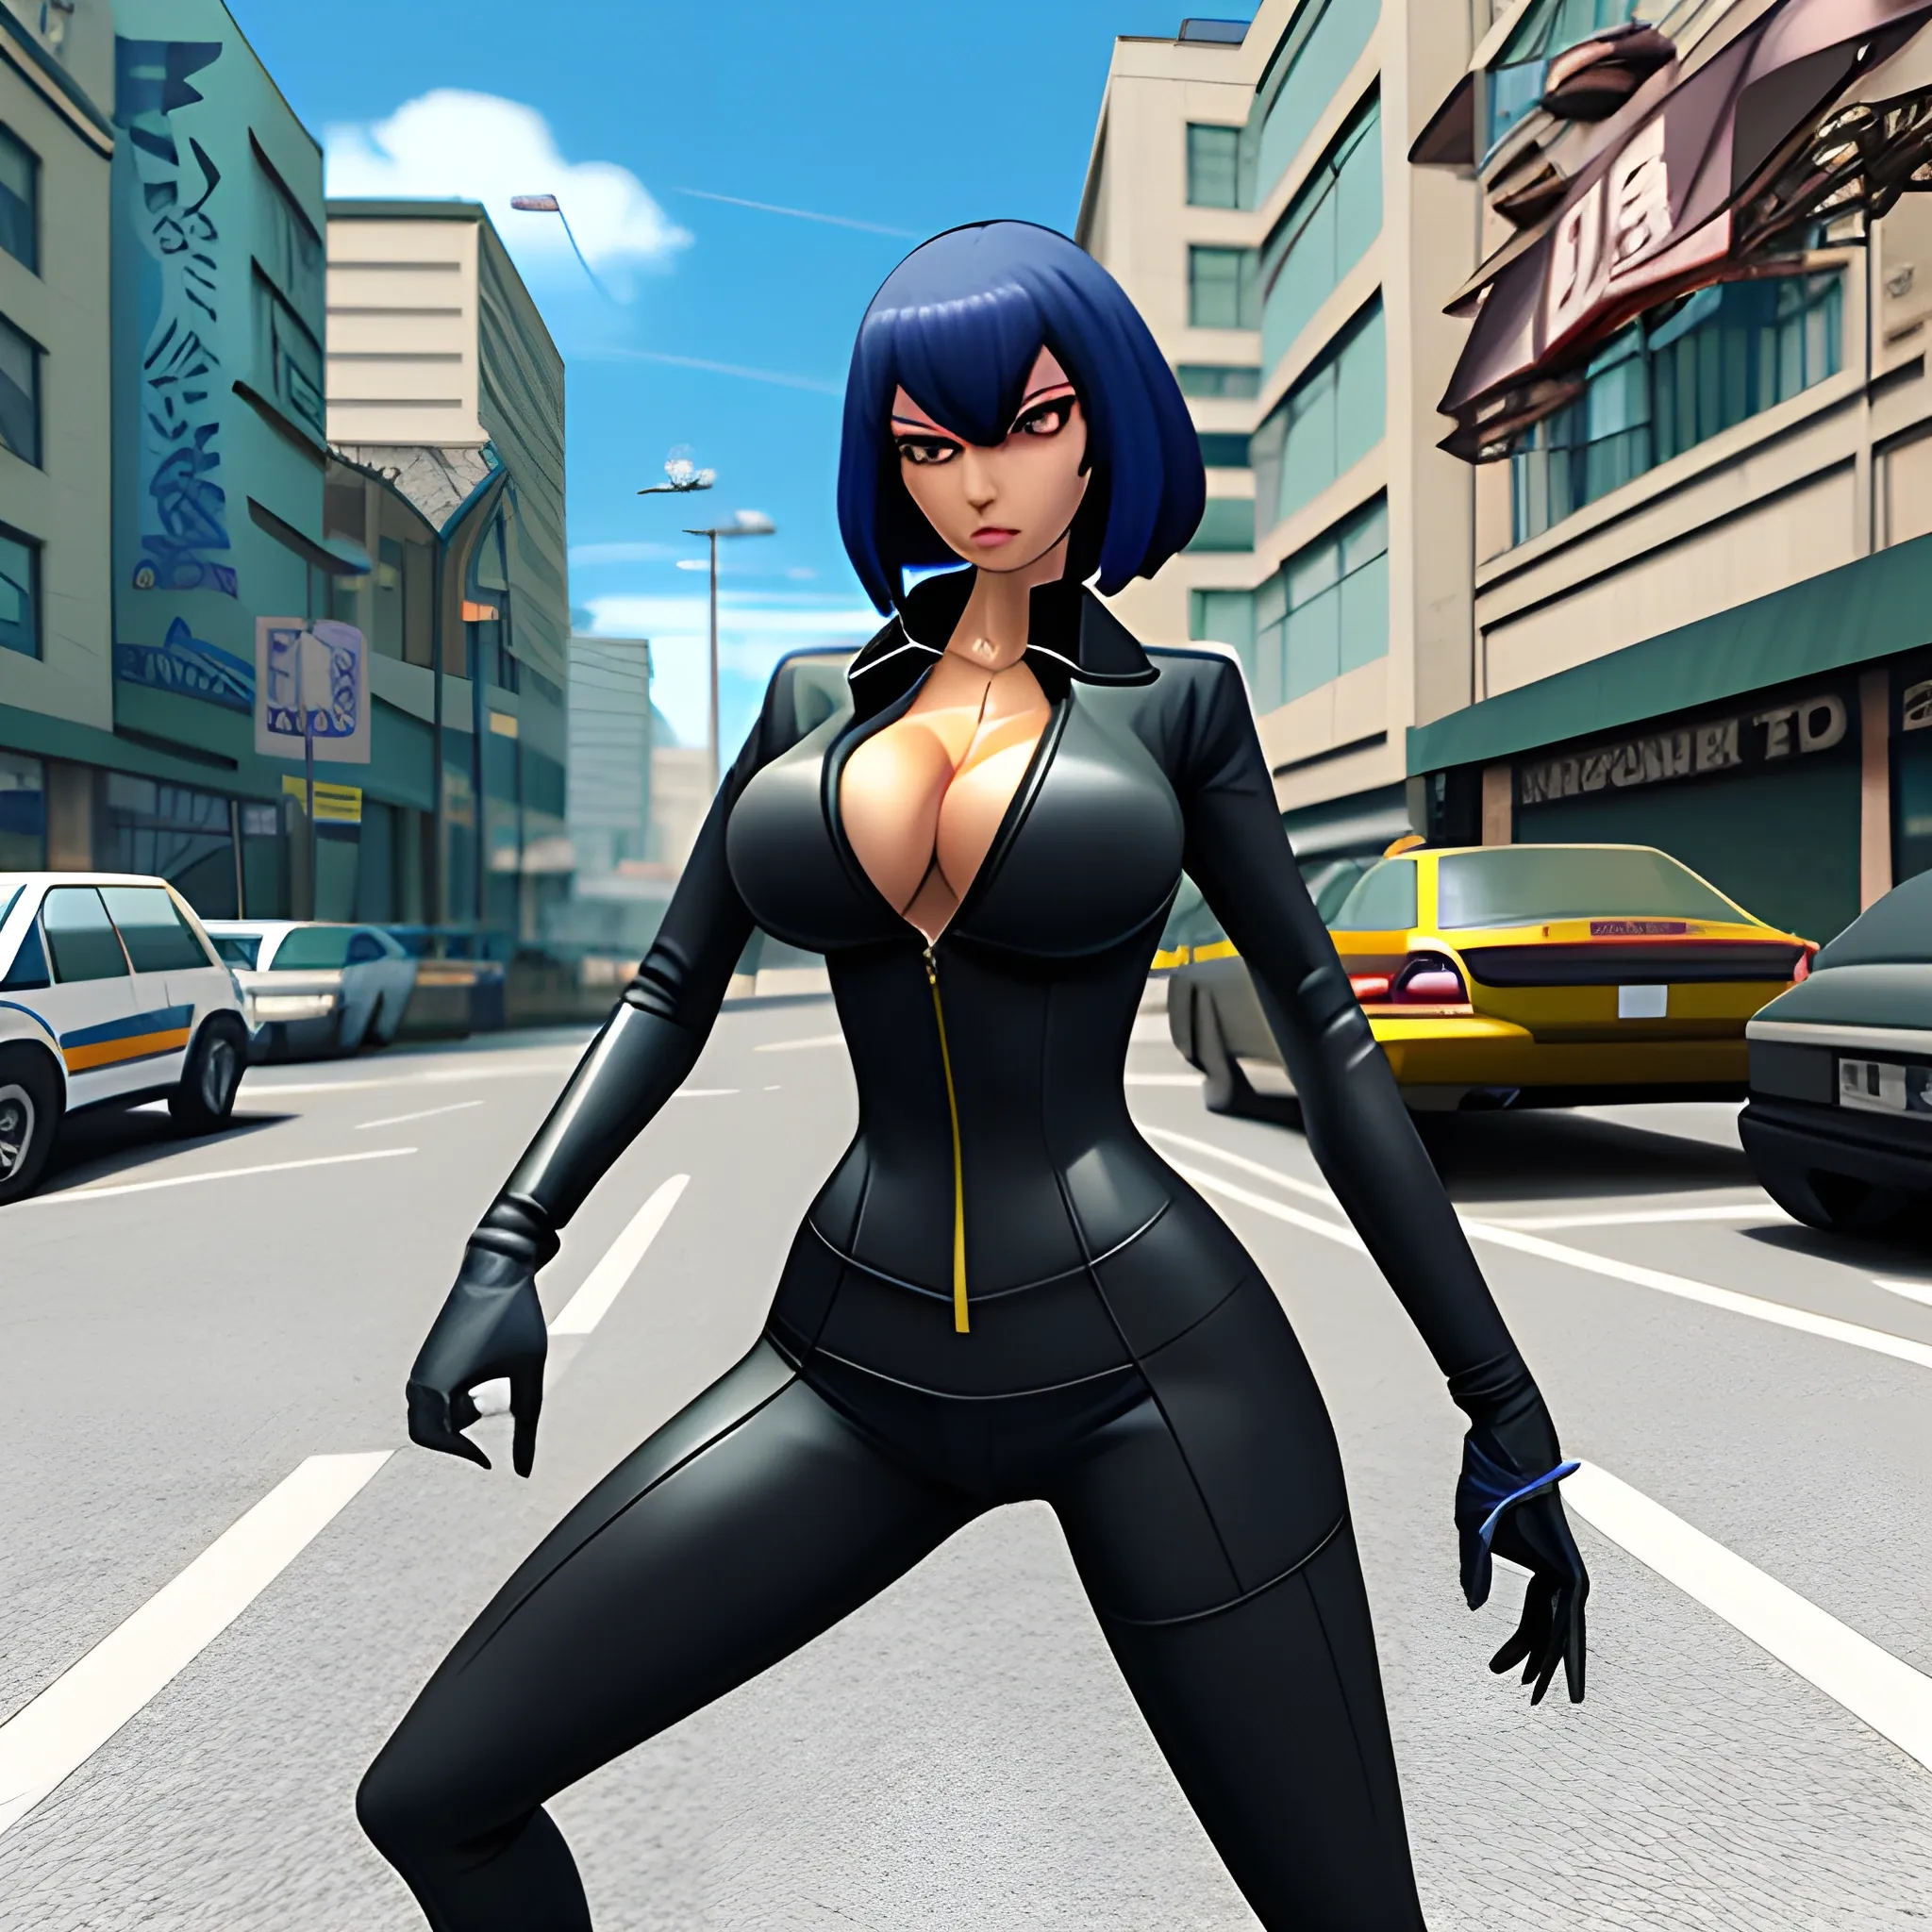 anime girl gangster shot in police city area , 3D